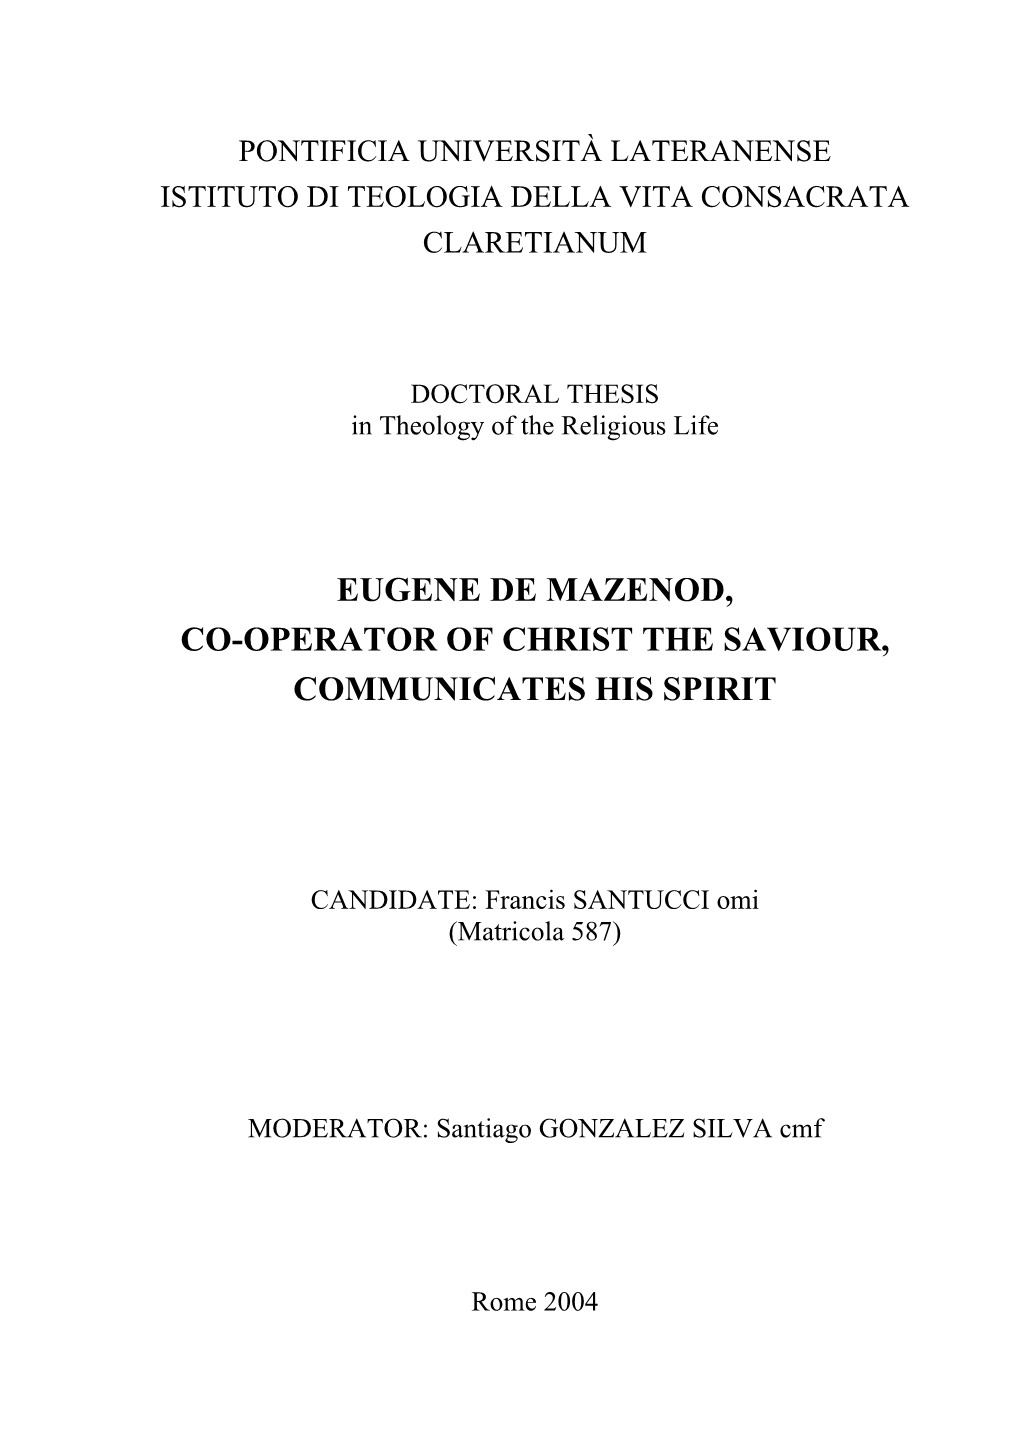 Eugene De Mazenod, Co-Operator of Christ the Saviour…